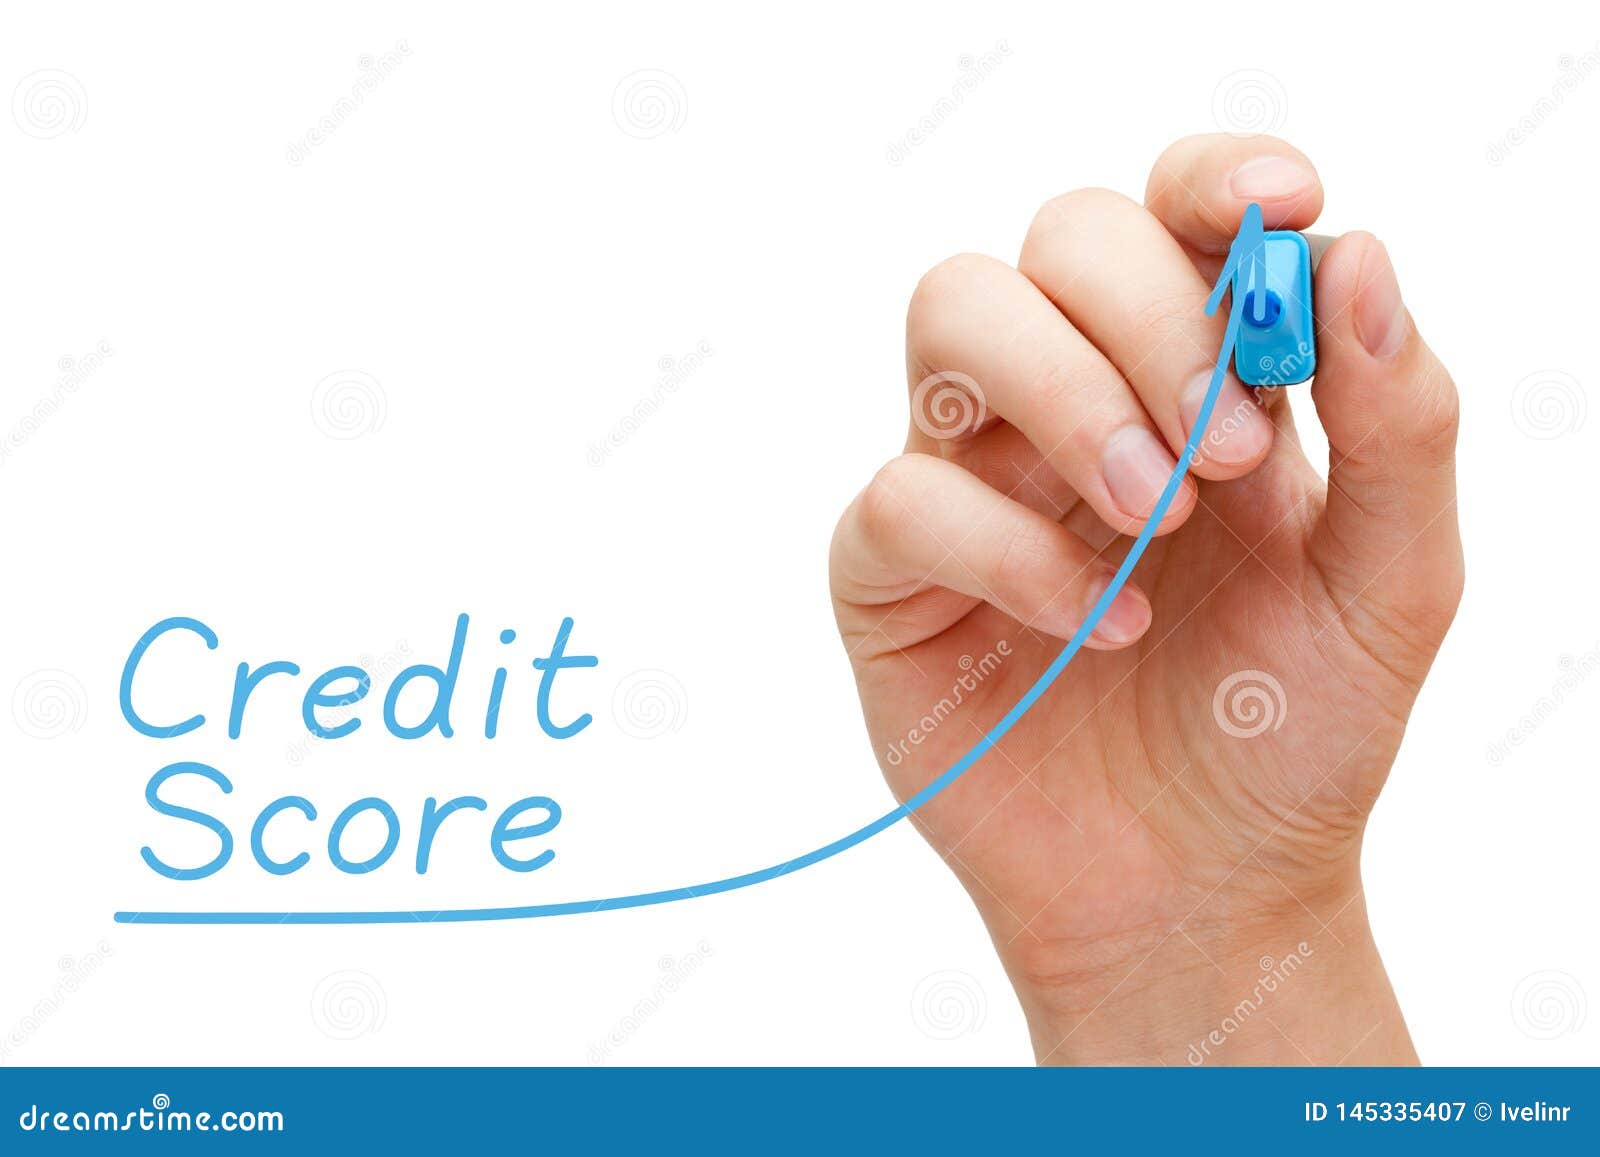 increasing credit score graph concept